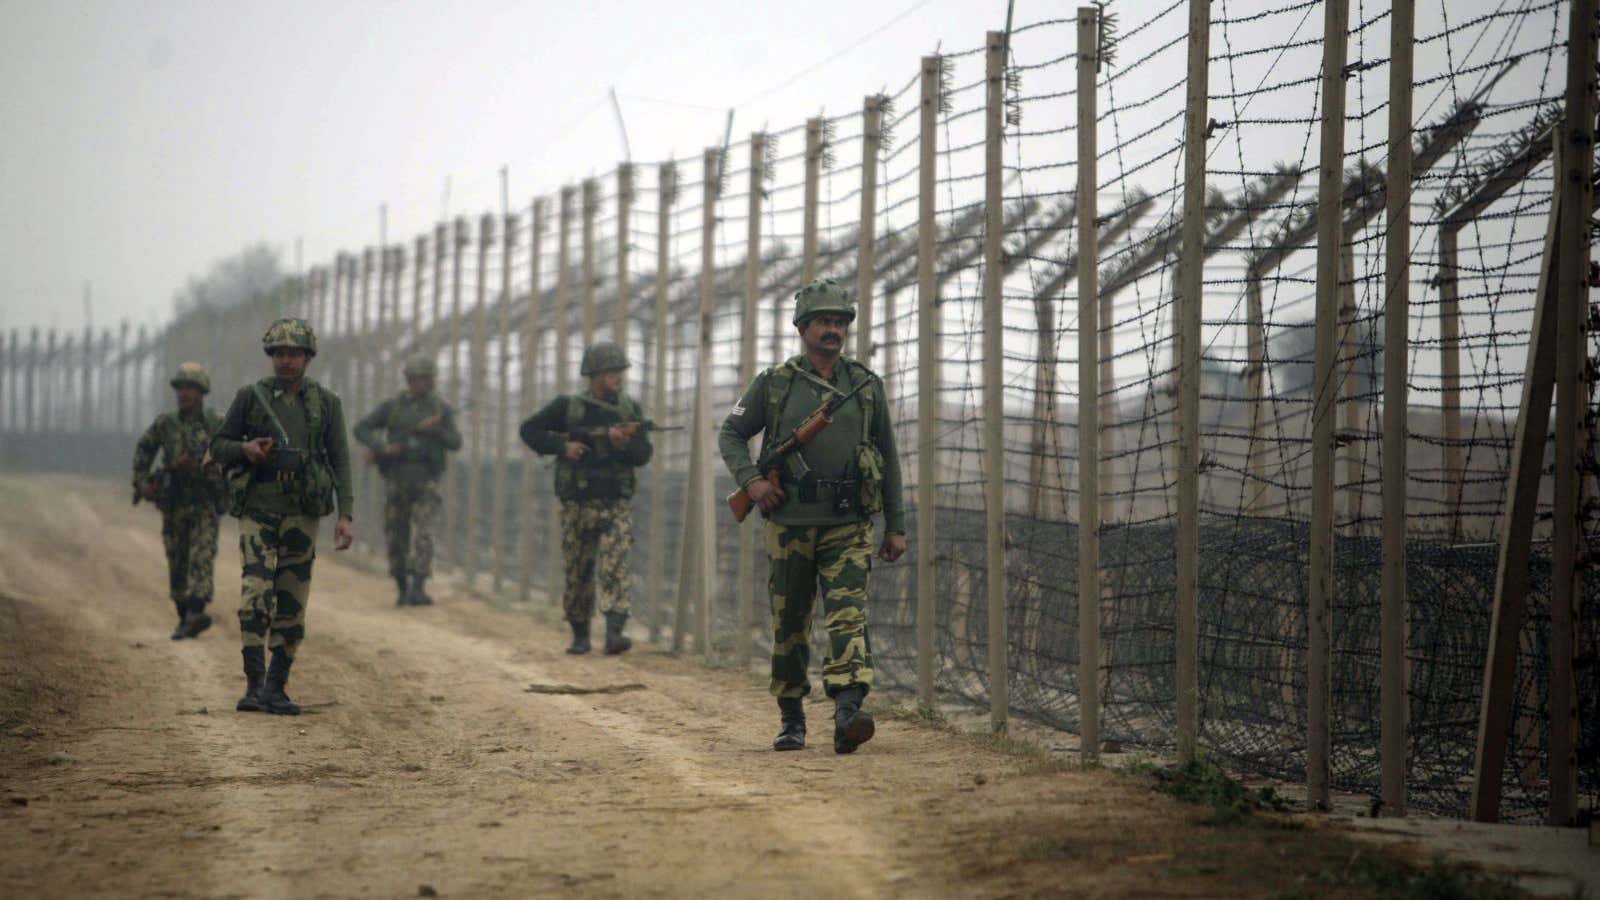 Almost 2,000 kilometres of the India-Pakistan border is now fenced